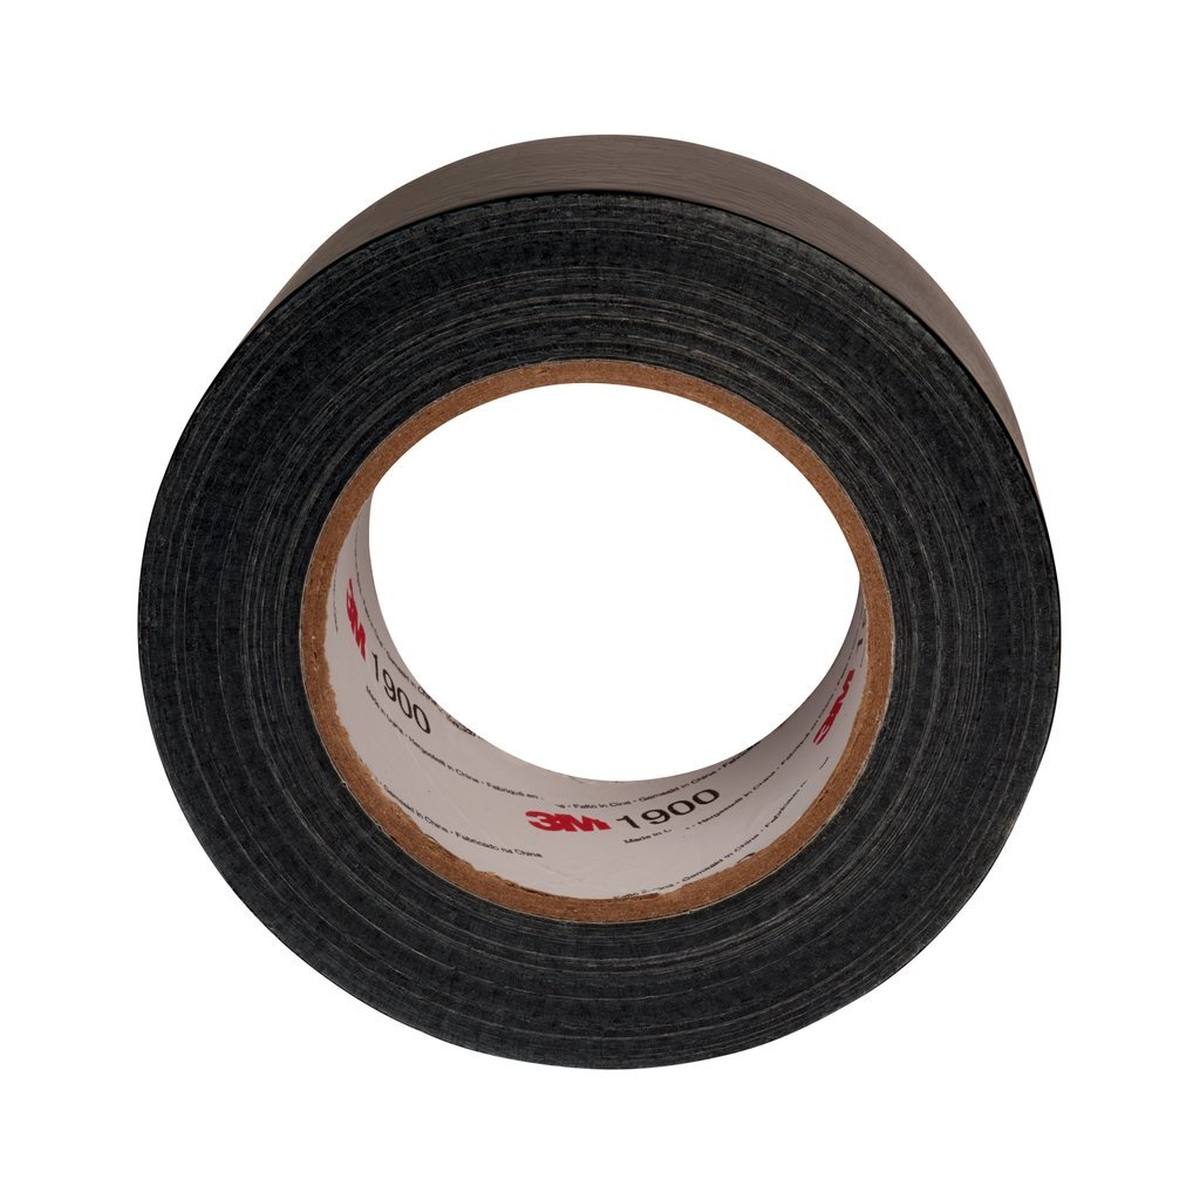 3M Fabric tape 1900 50mmx50m black